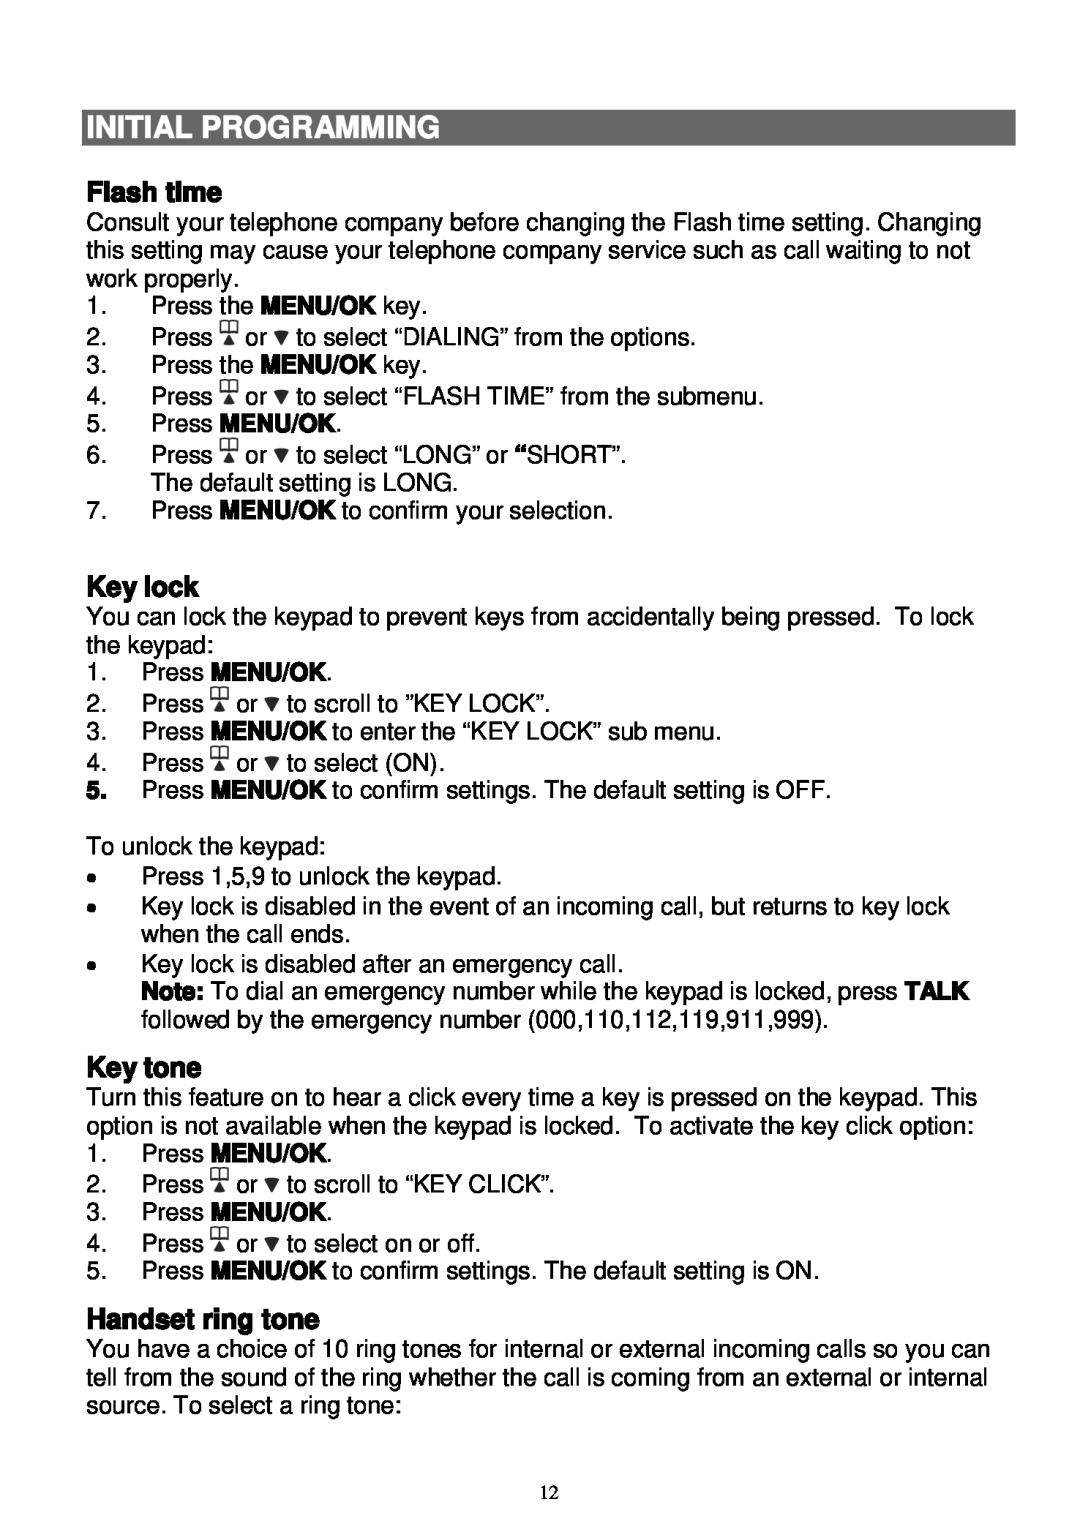 Sanyo LNS-W10 instruction manual Flash time, Key lock, Key tone, Handset ring tone, Initial Programming 